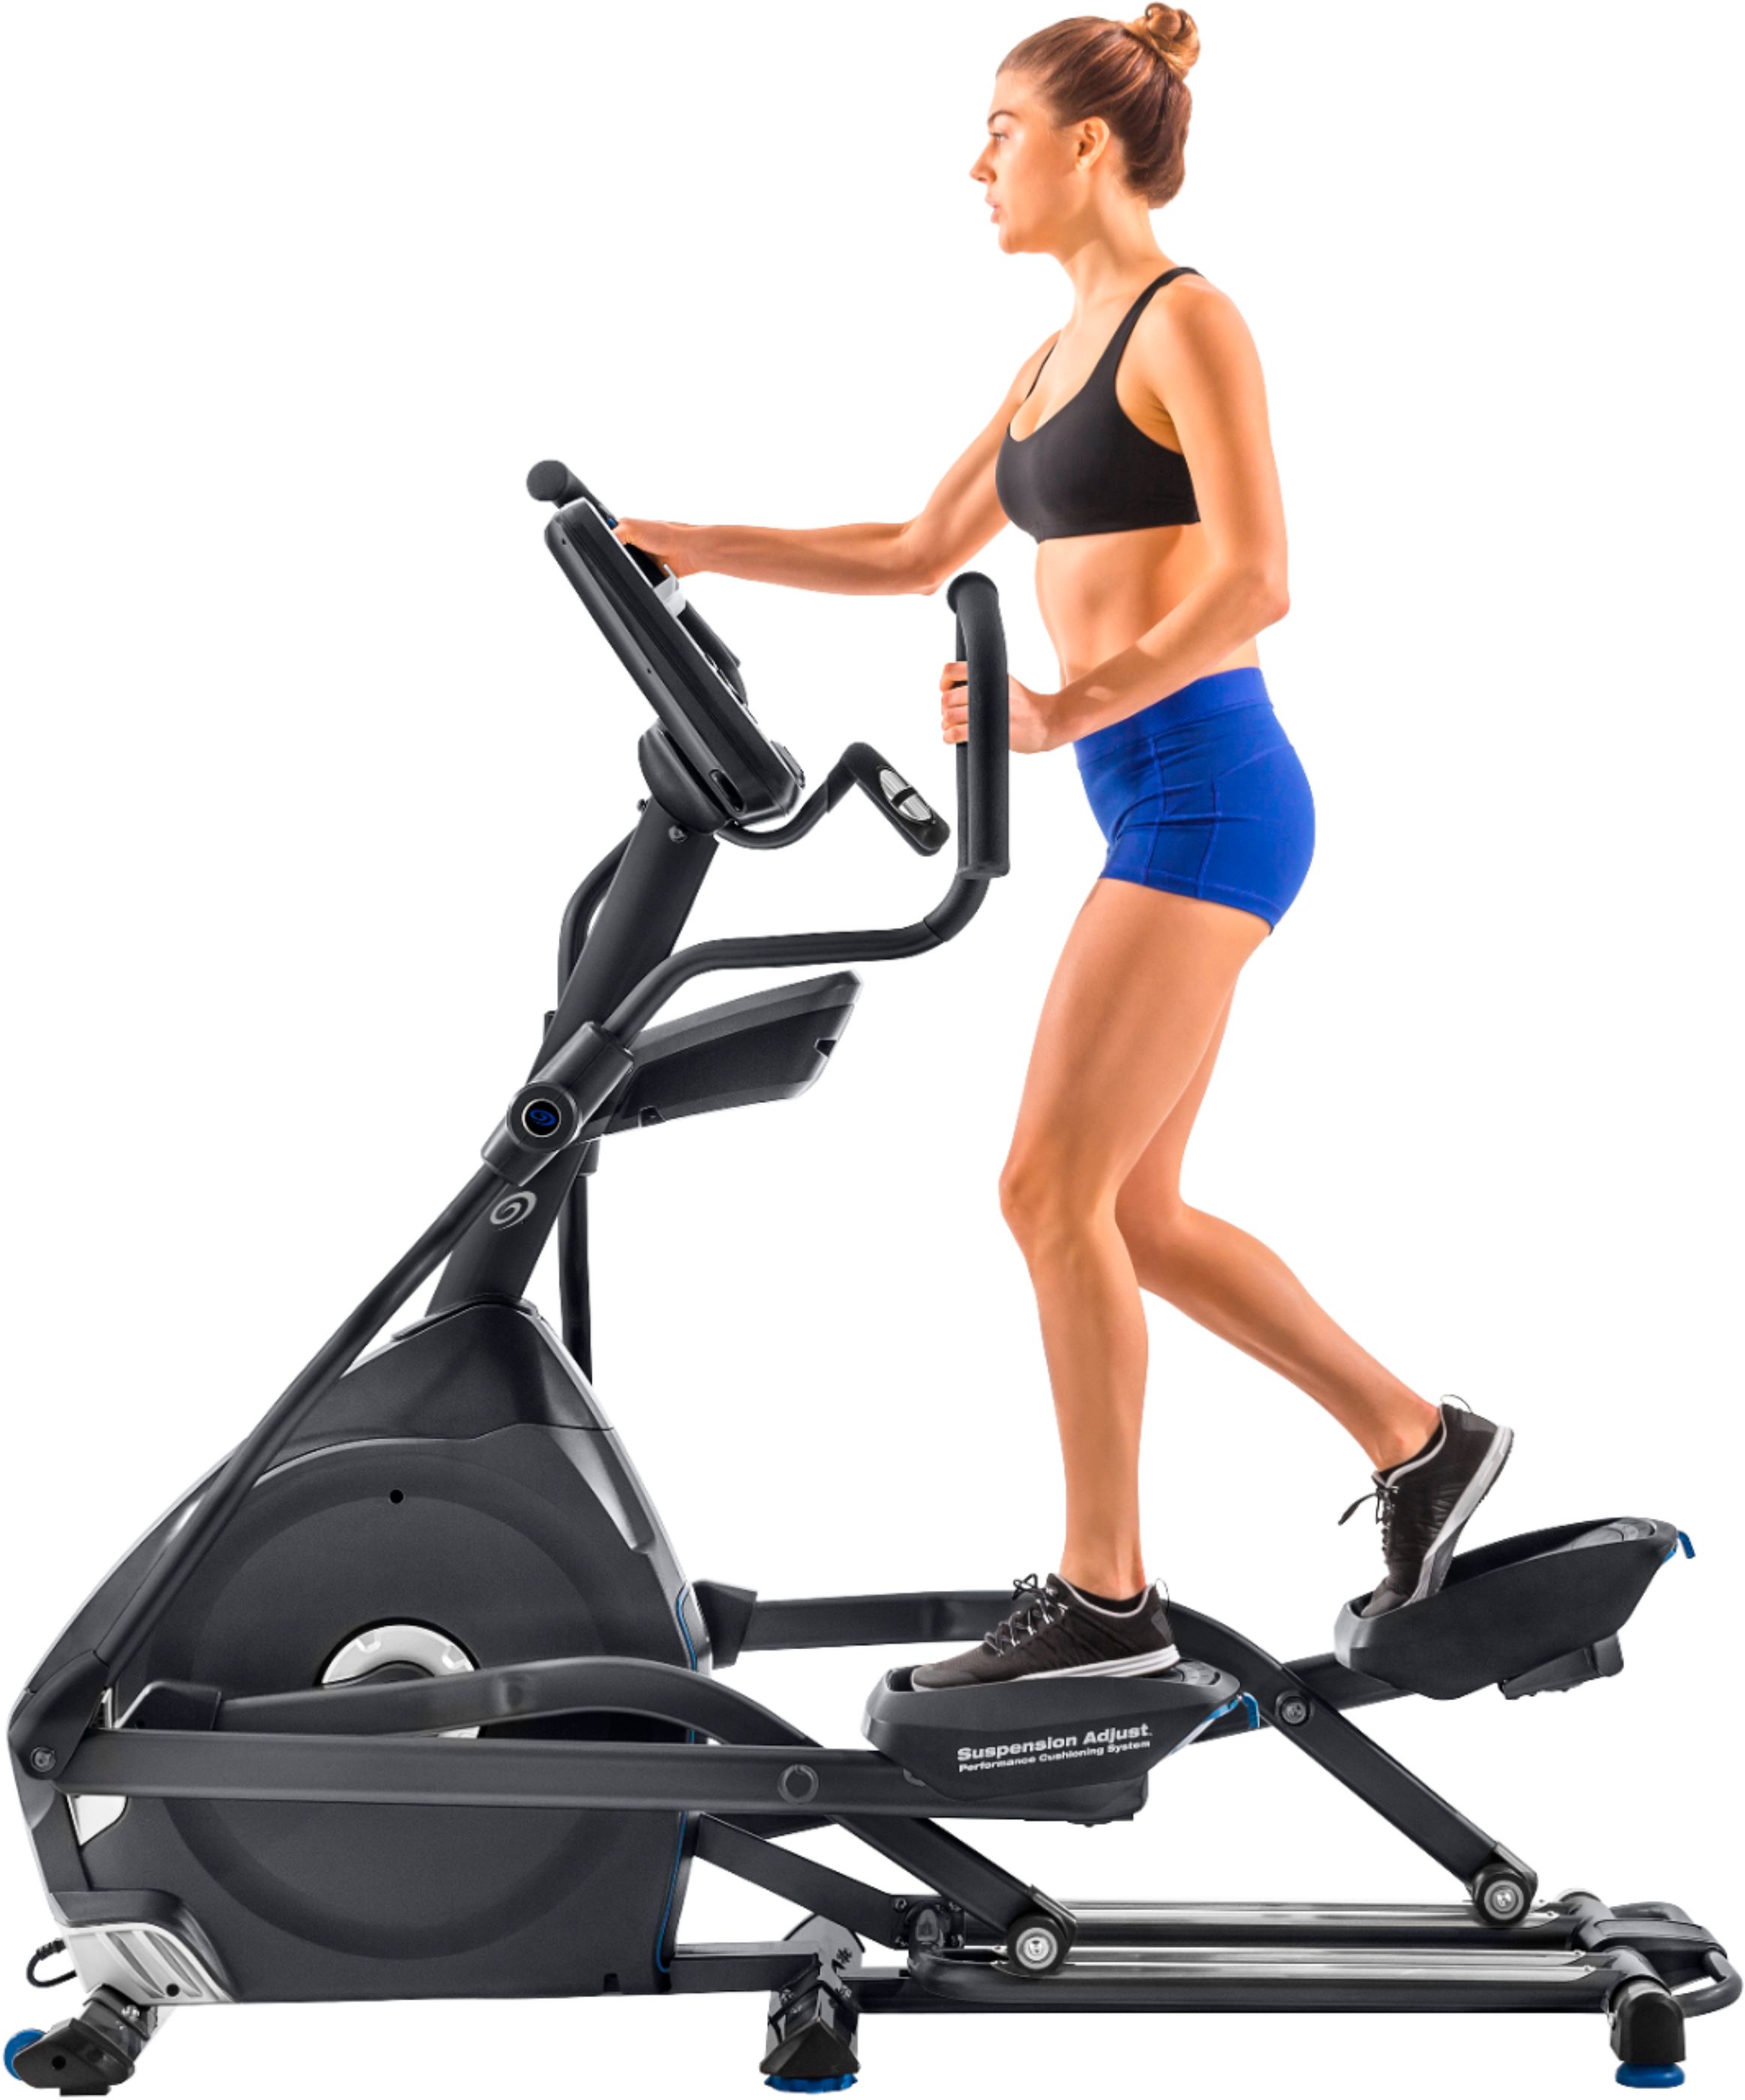 Nautilus E618 Performance Series Home Workout Cardio Elliptical Trainer for sale online 